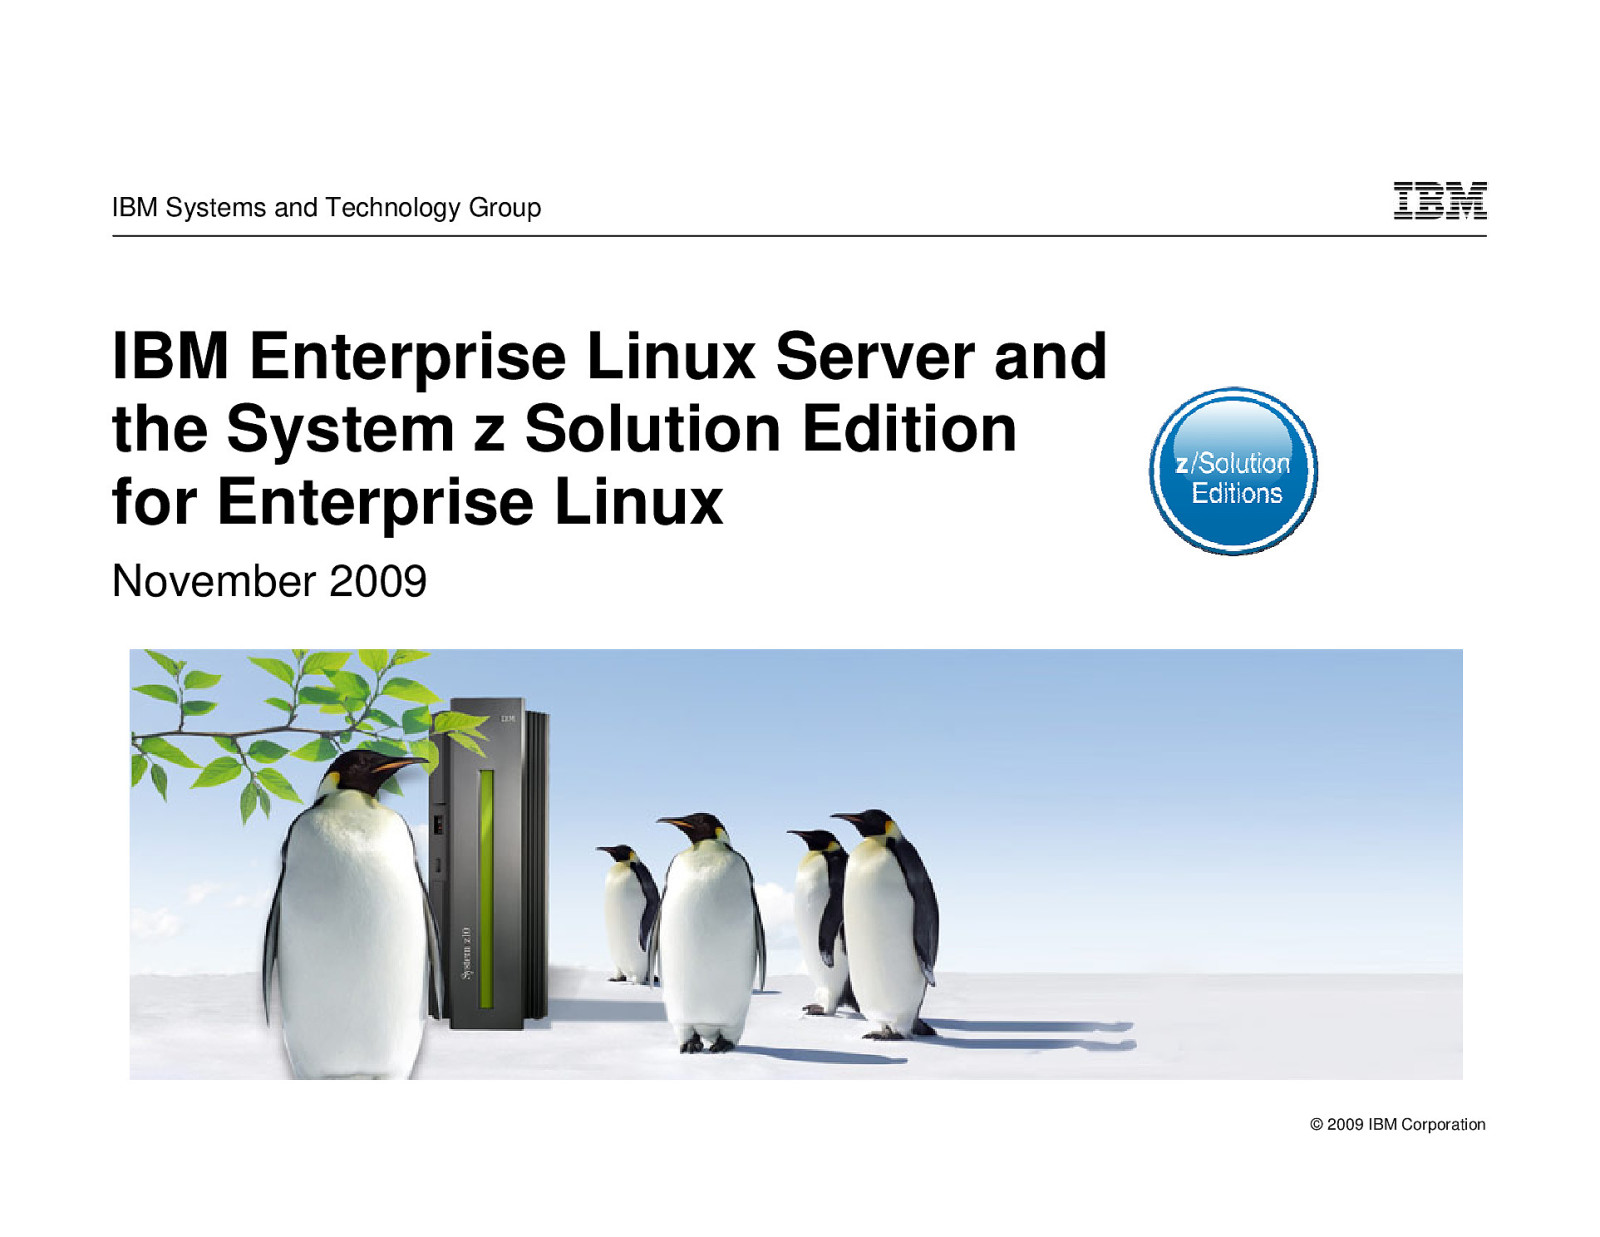 Announcing the IBM Enterprise Linux Server and the System z Solution Edition for Enterprise Linux